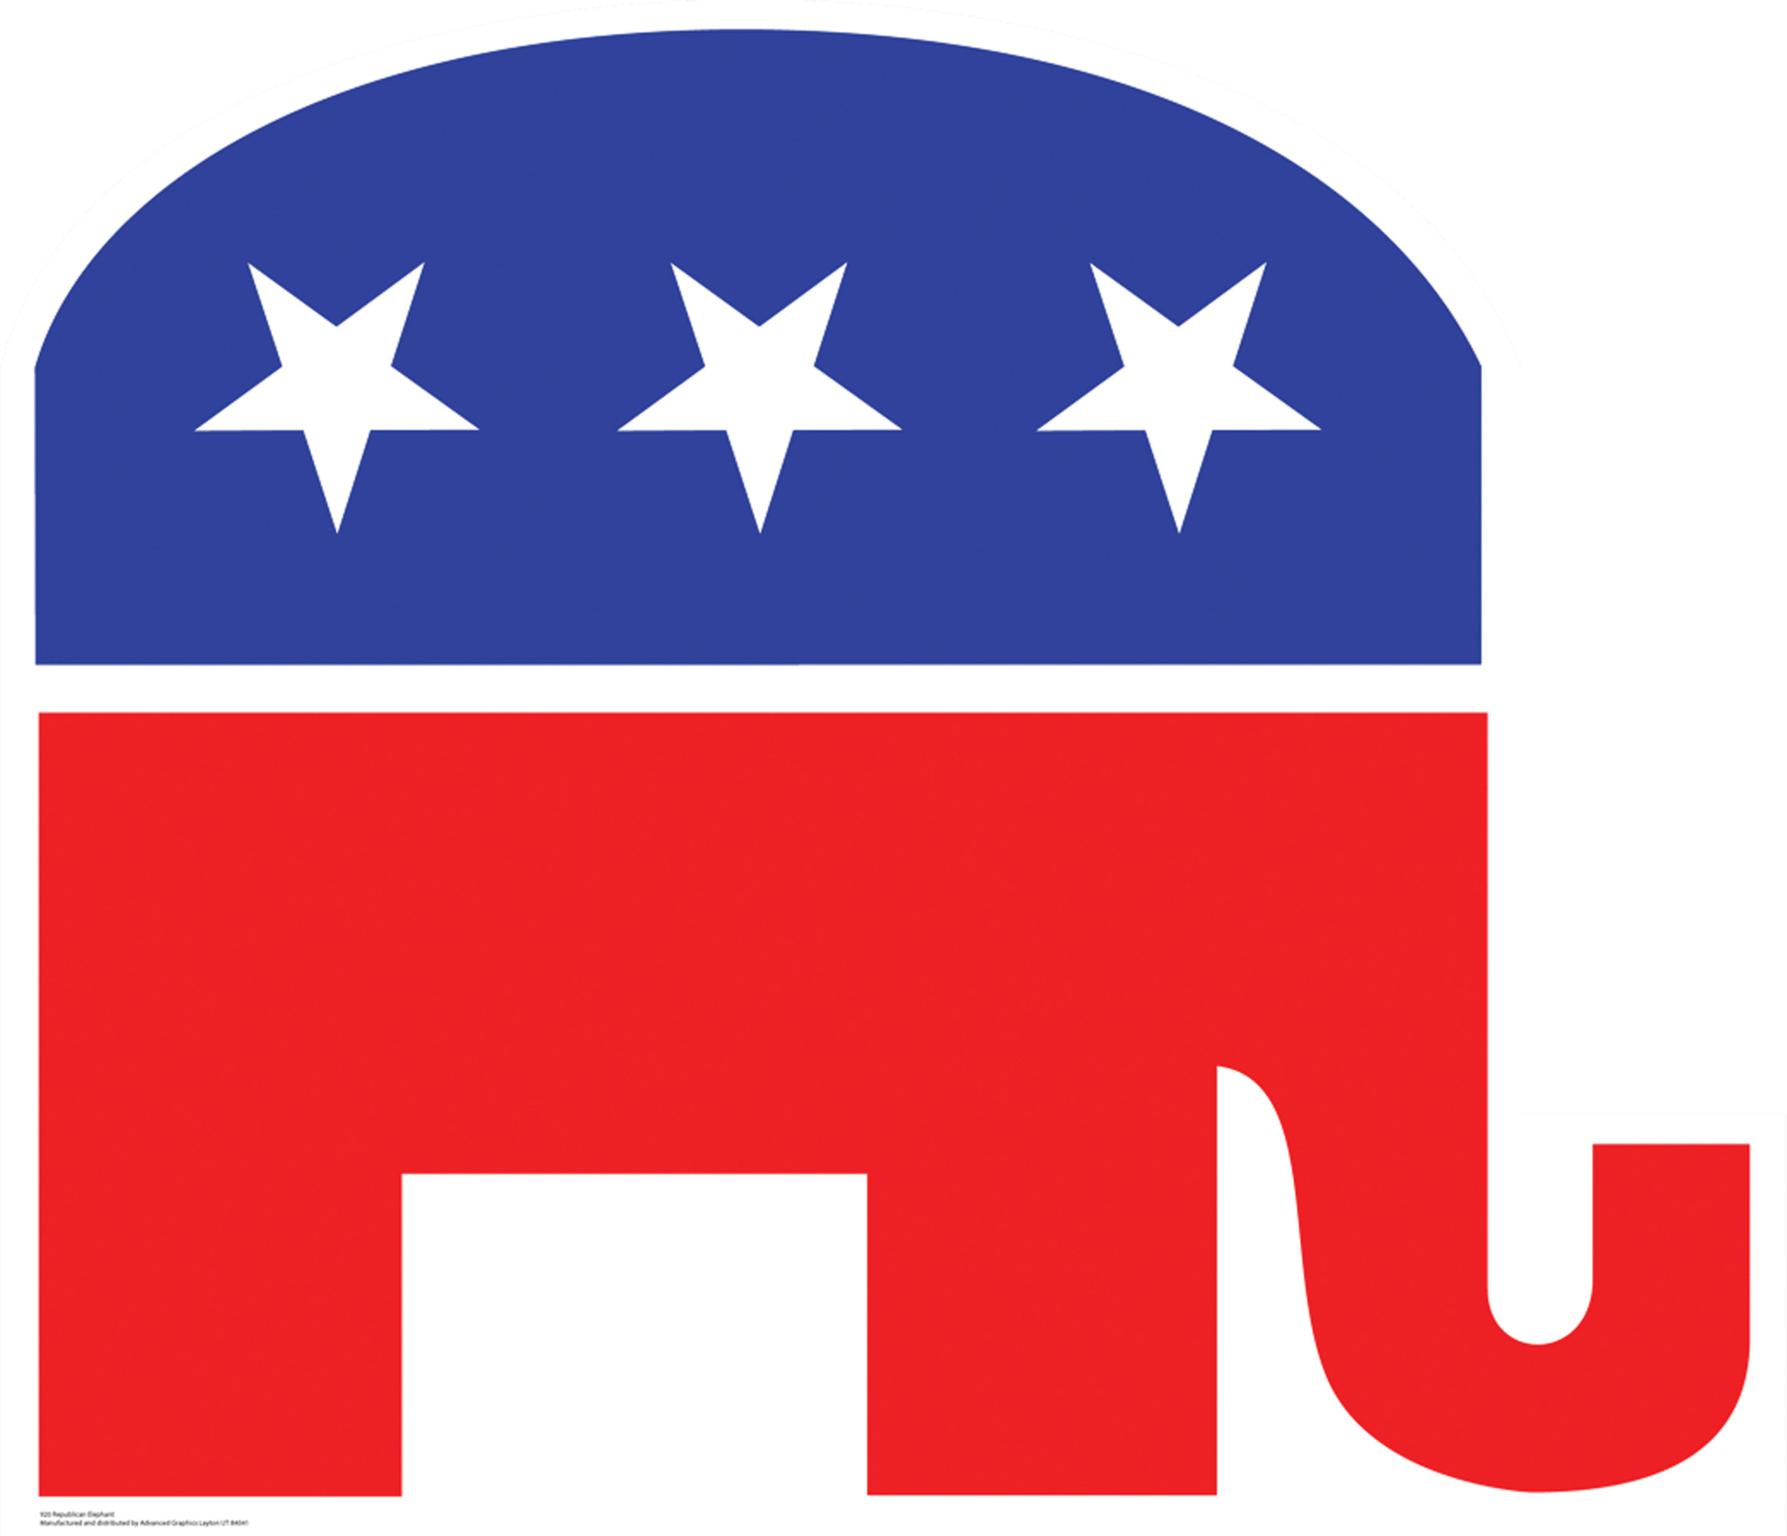 ... Republican Elephant isola